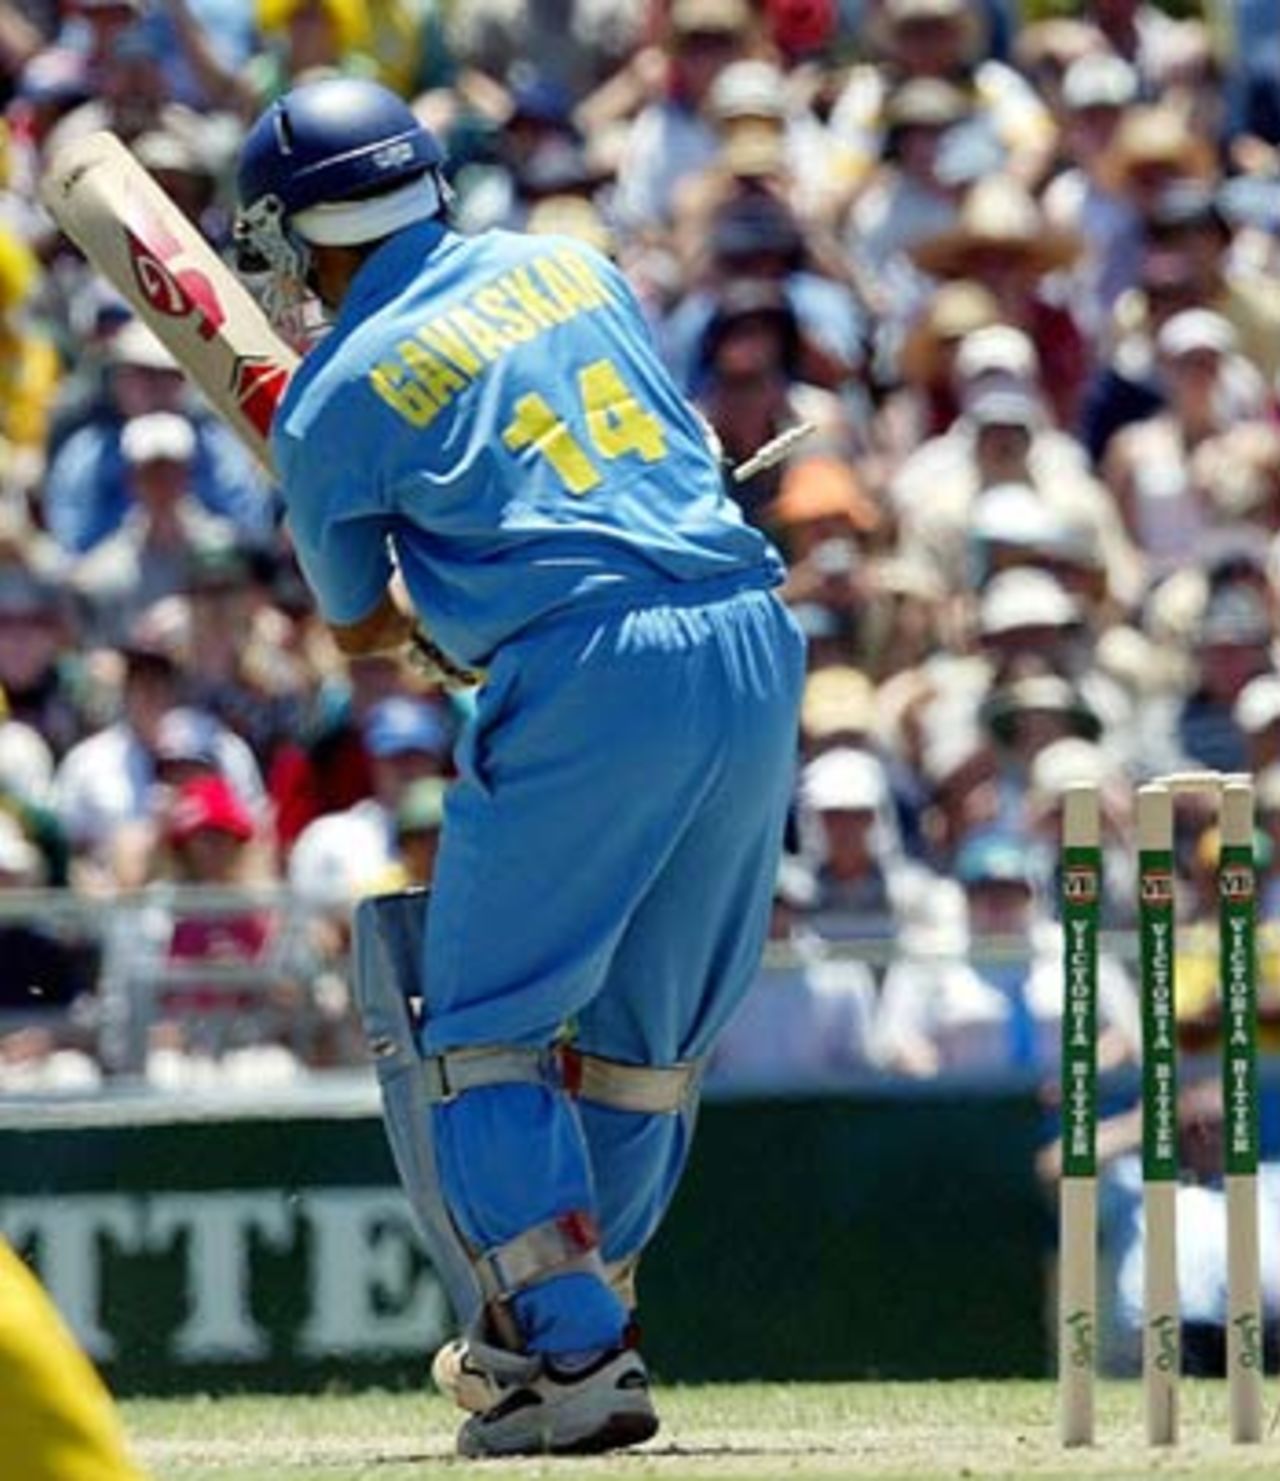 India slump further as Rohan Gavaskar is bowled by Brett Lee, Australia v India, 11th match, VB Series, Perth, February 1, 2004